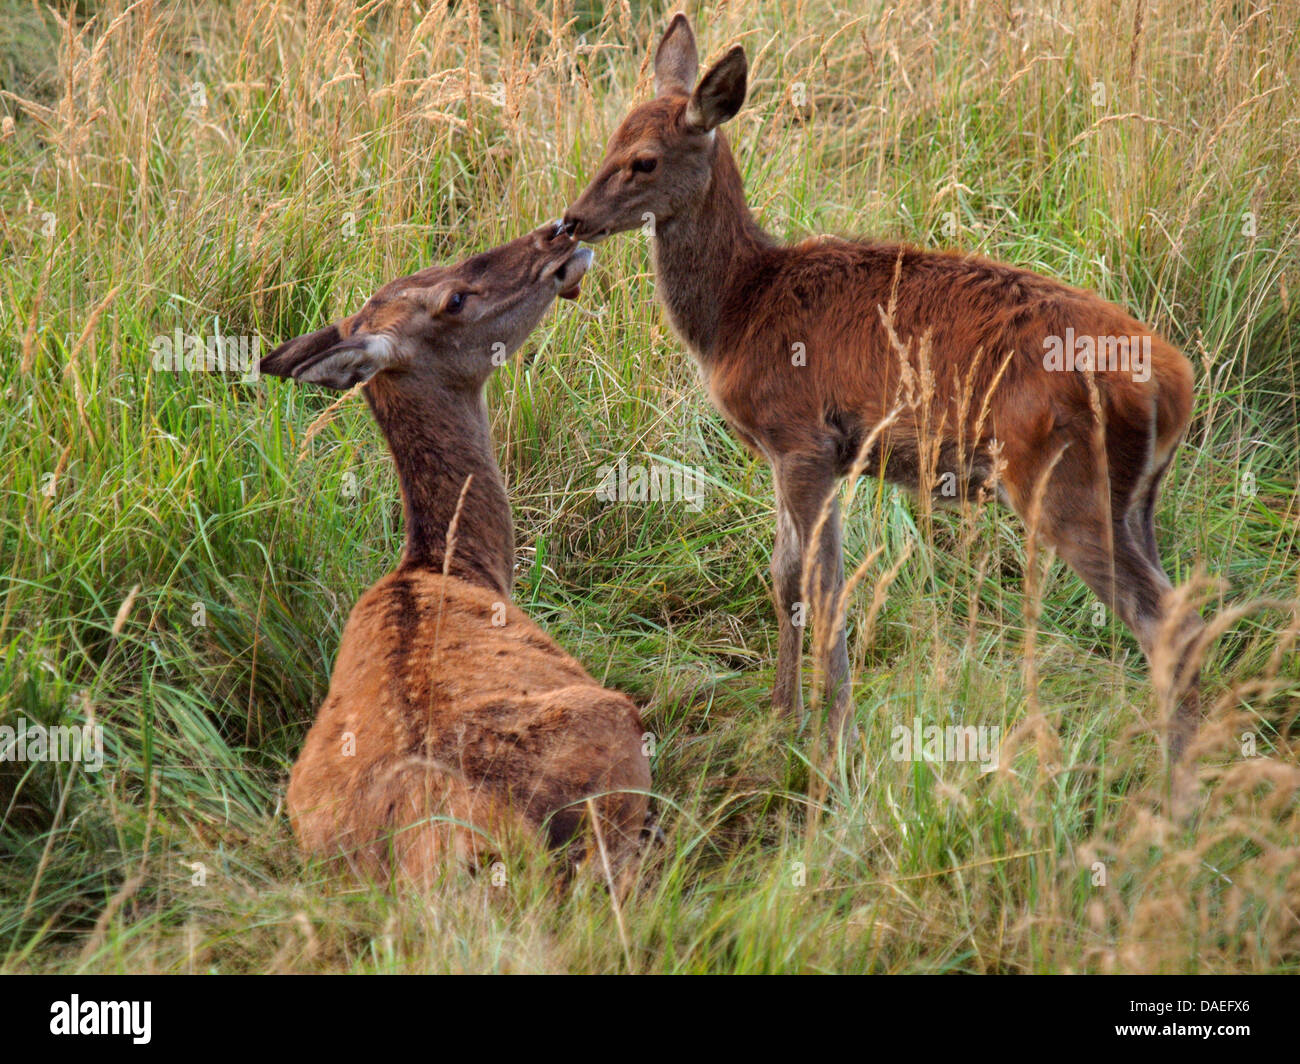 red deer (Cervus elaphus), female with calf, Germany Stock Photo